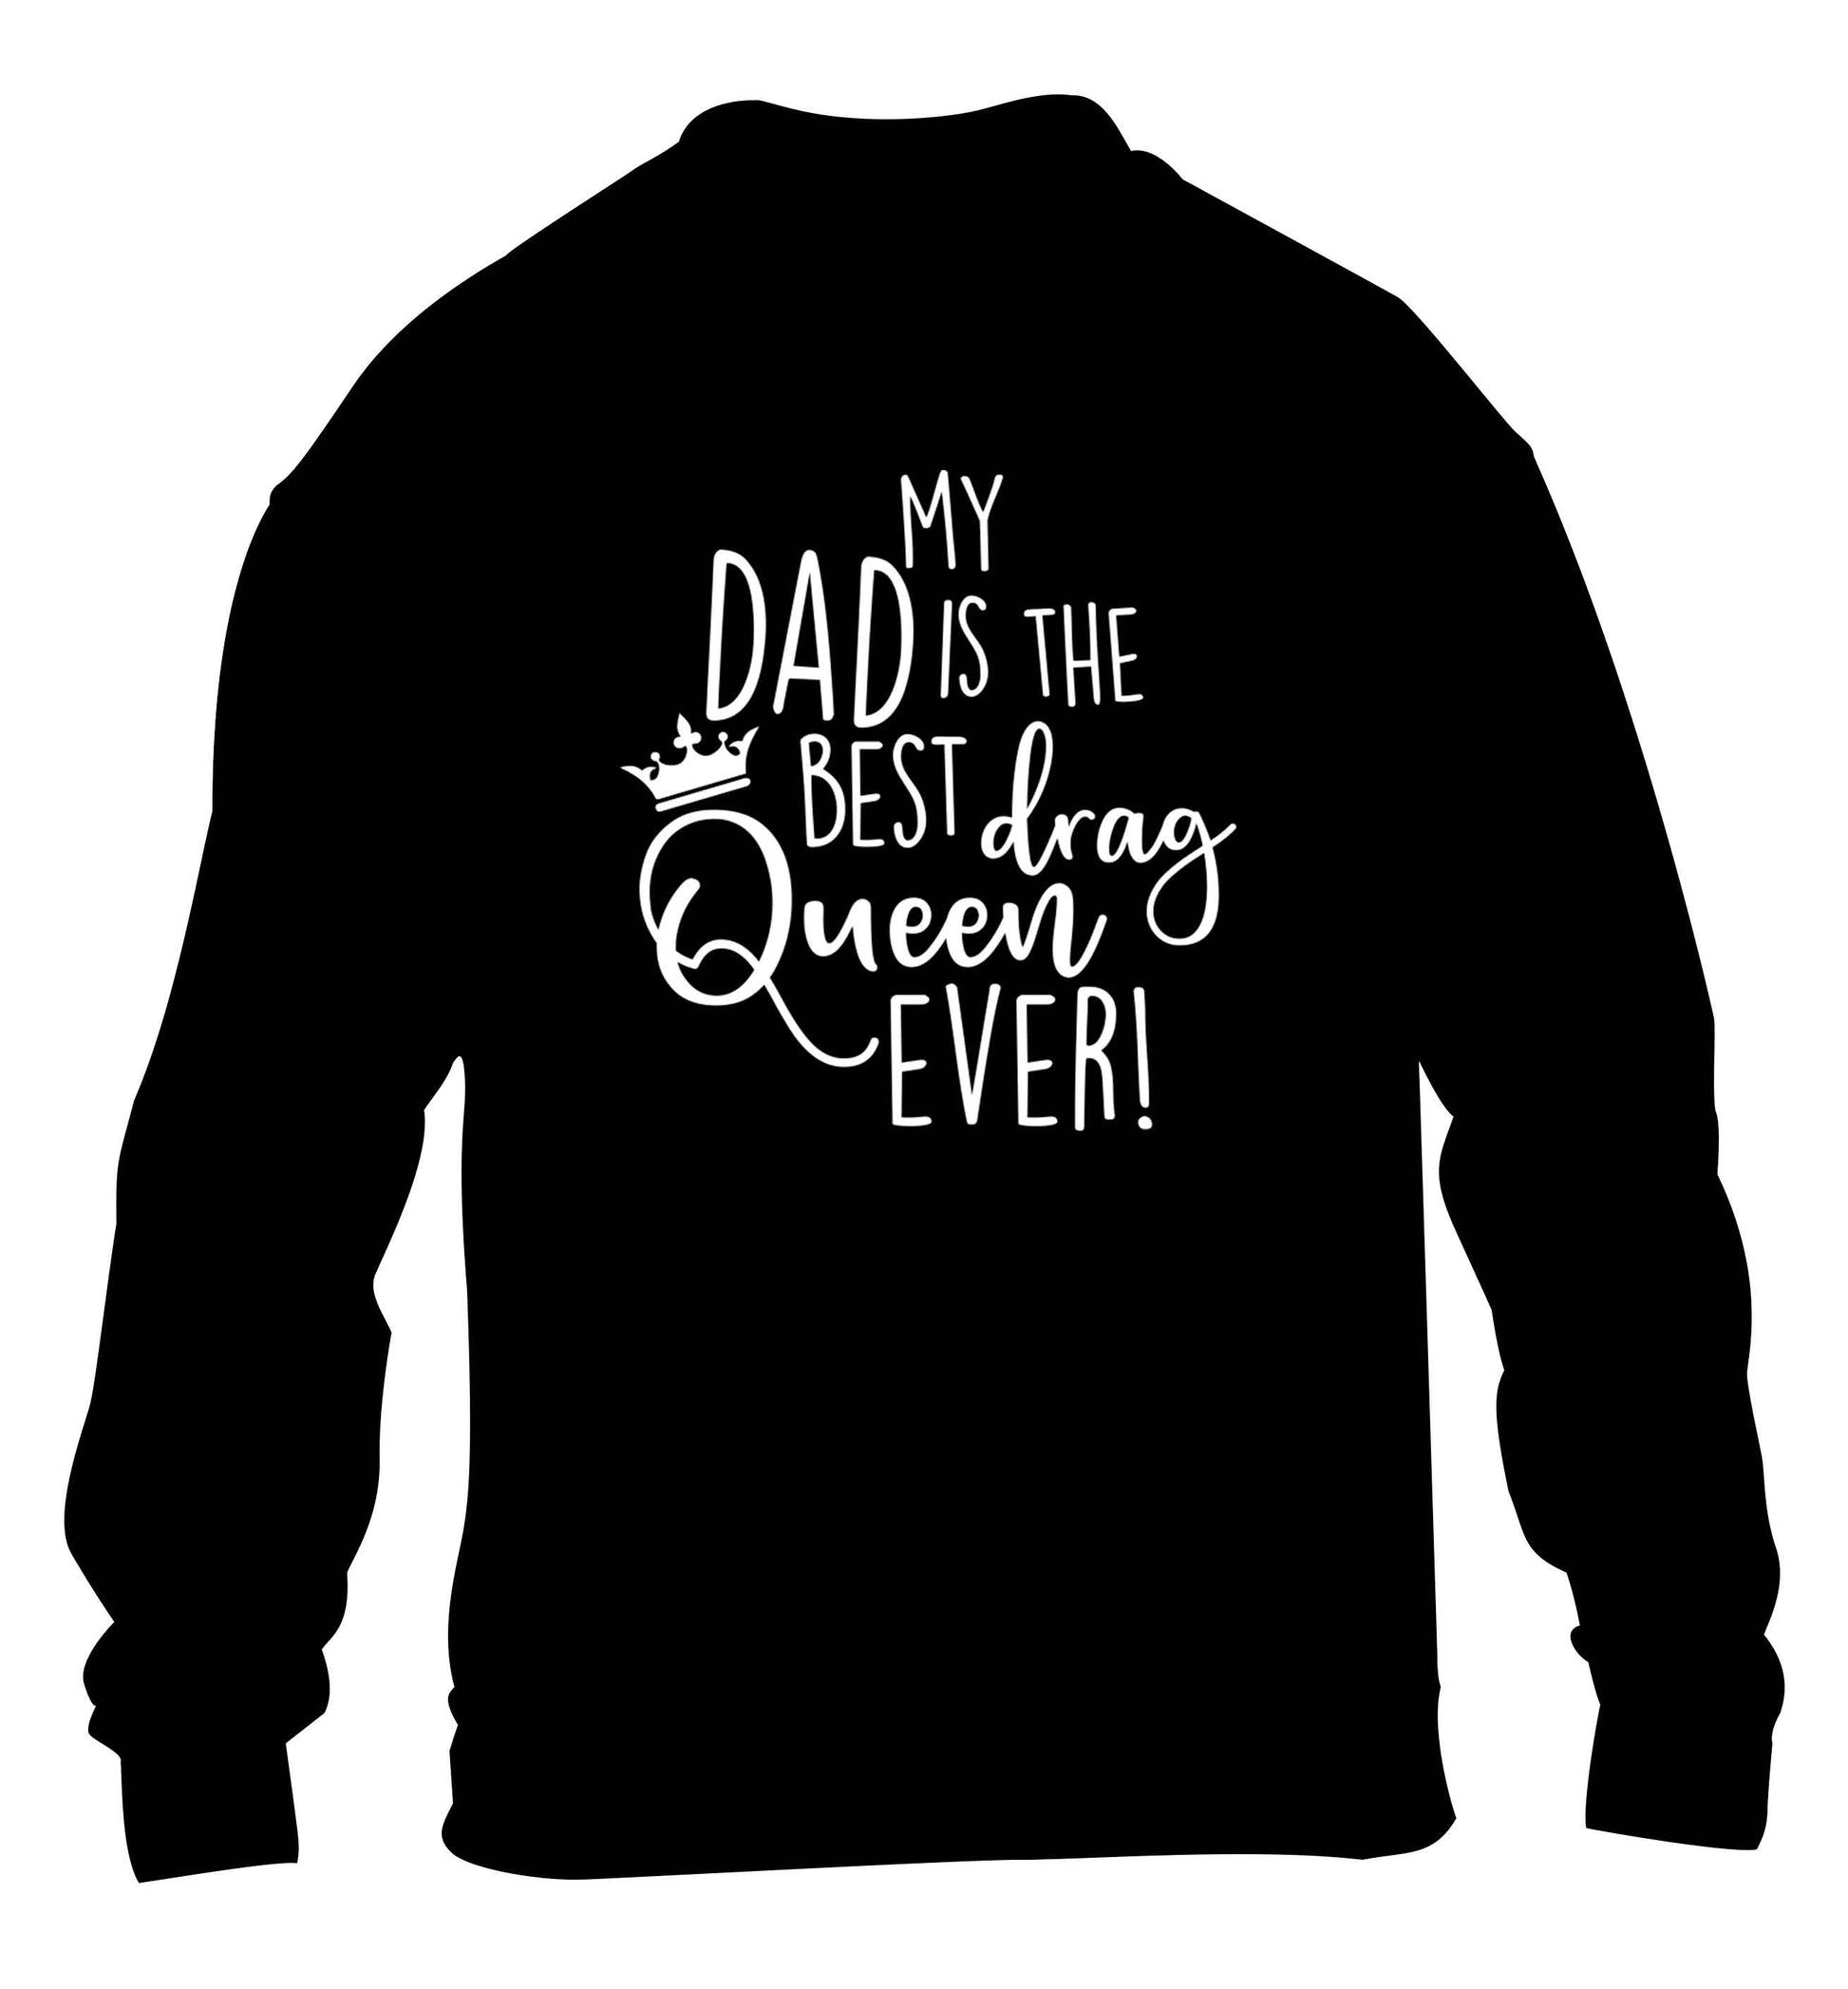 My dad is the best drag Queen ever children's black sweater 12-13 Years